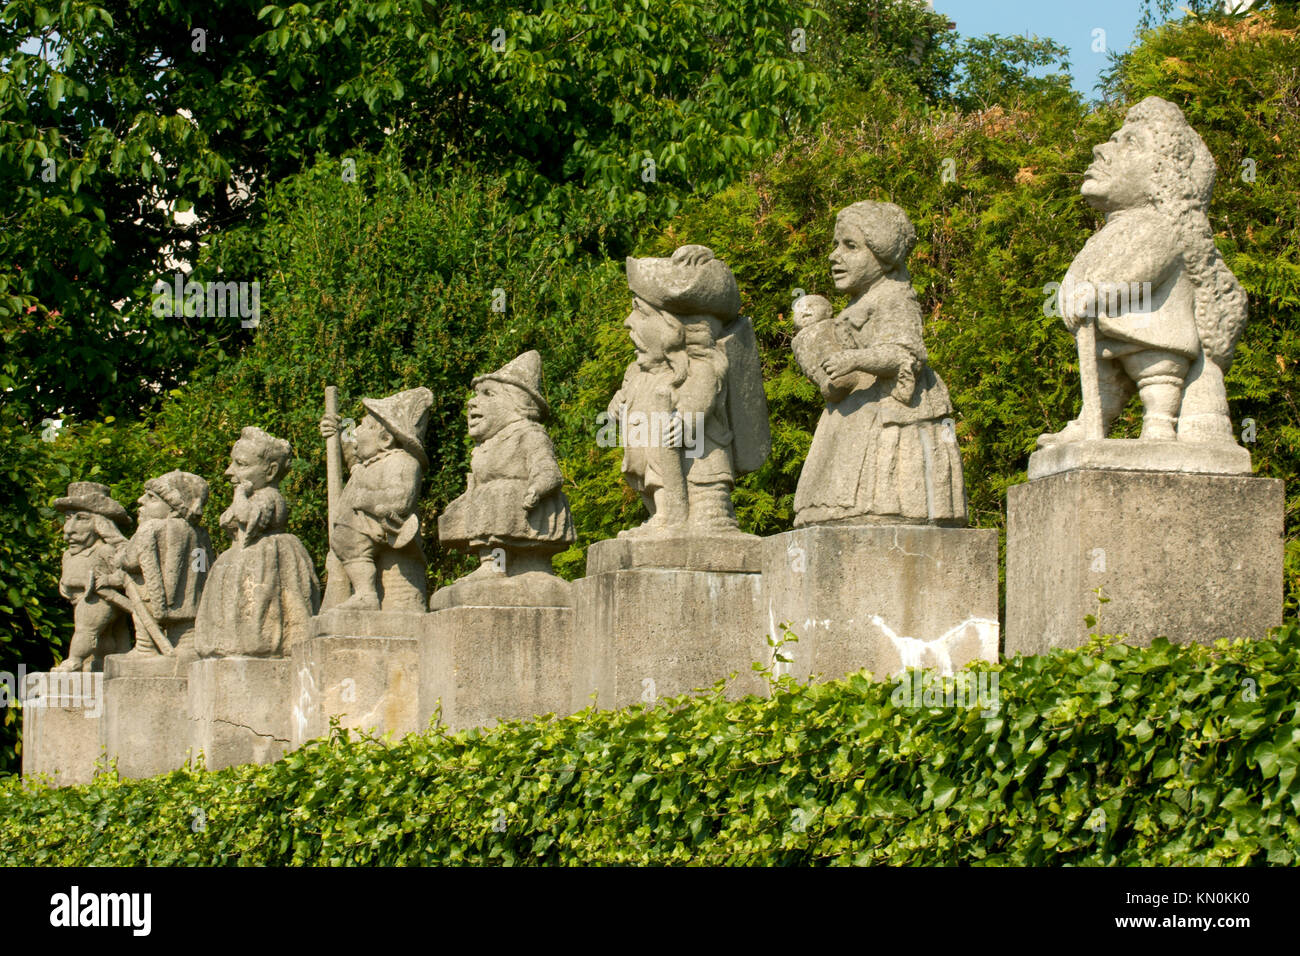 Czech Republic, Nove Mesto nad Metuji (Neustadt an der Mettau),  Statues by Matthias Bernhard Braun in the Castle Park Stock Photo